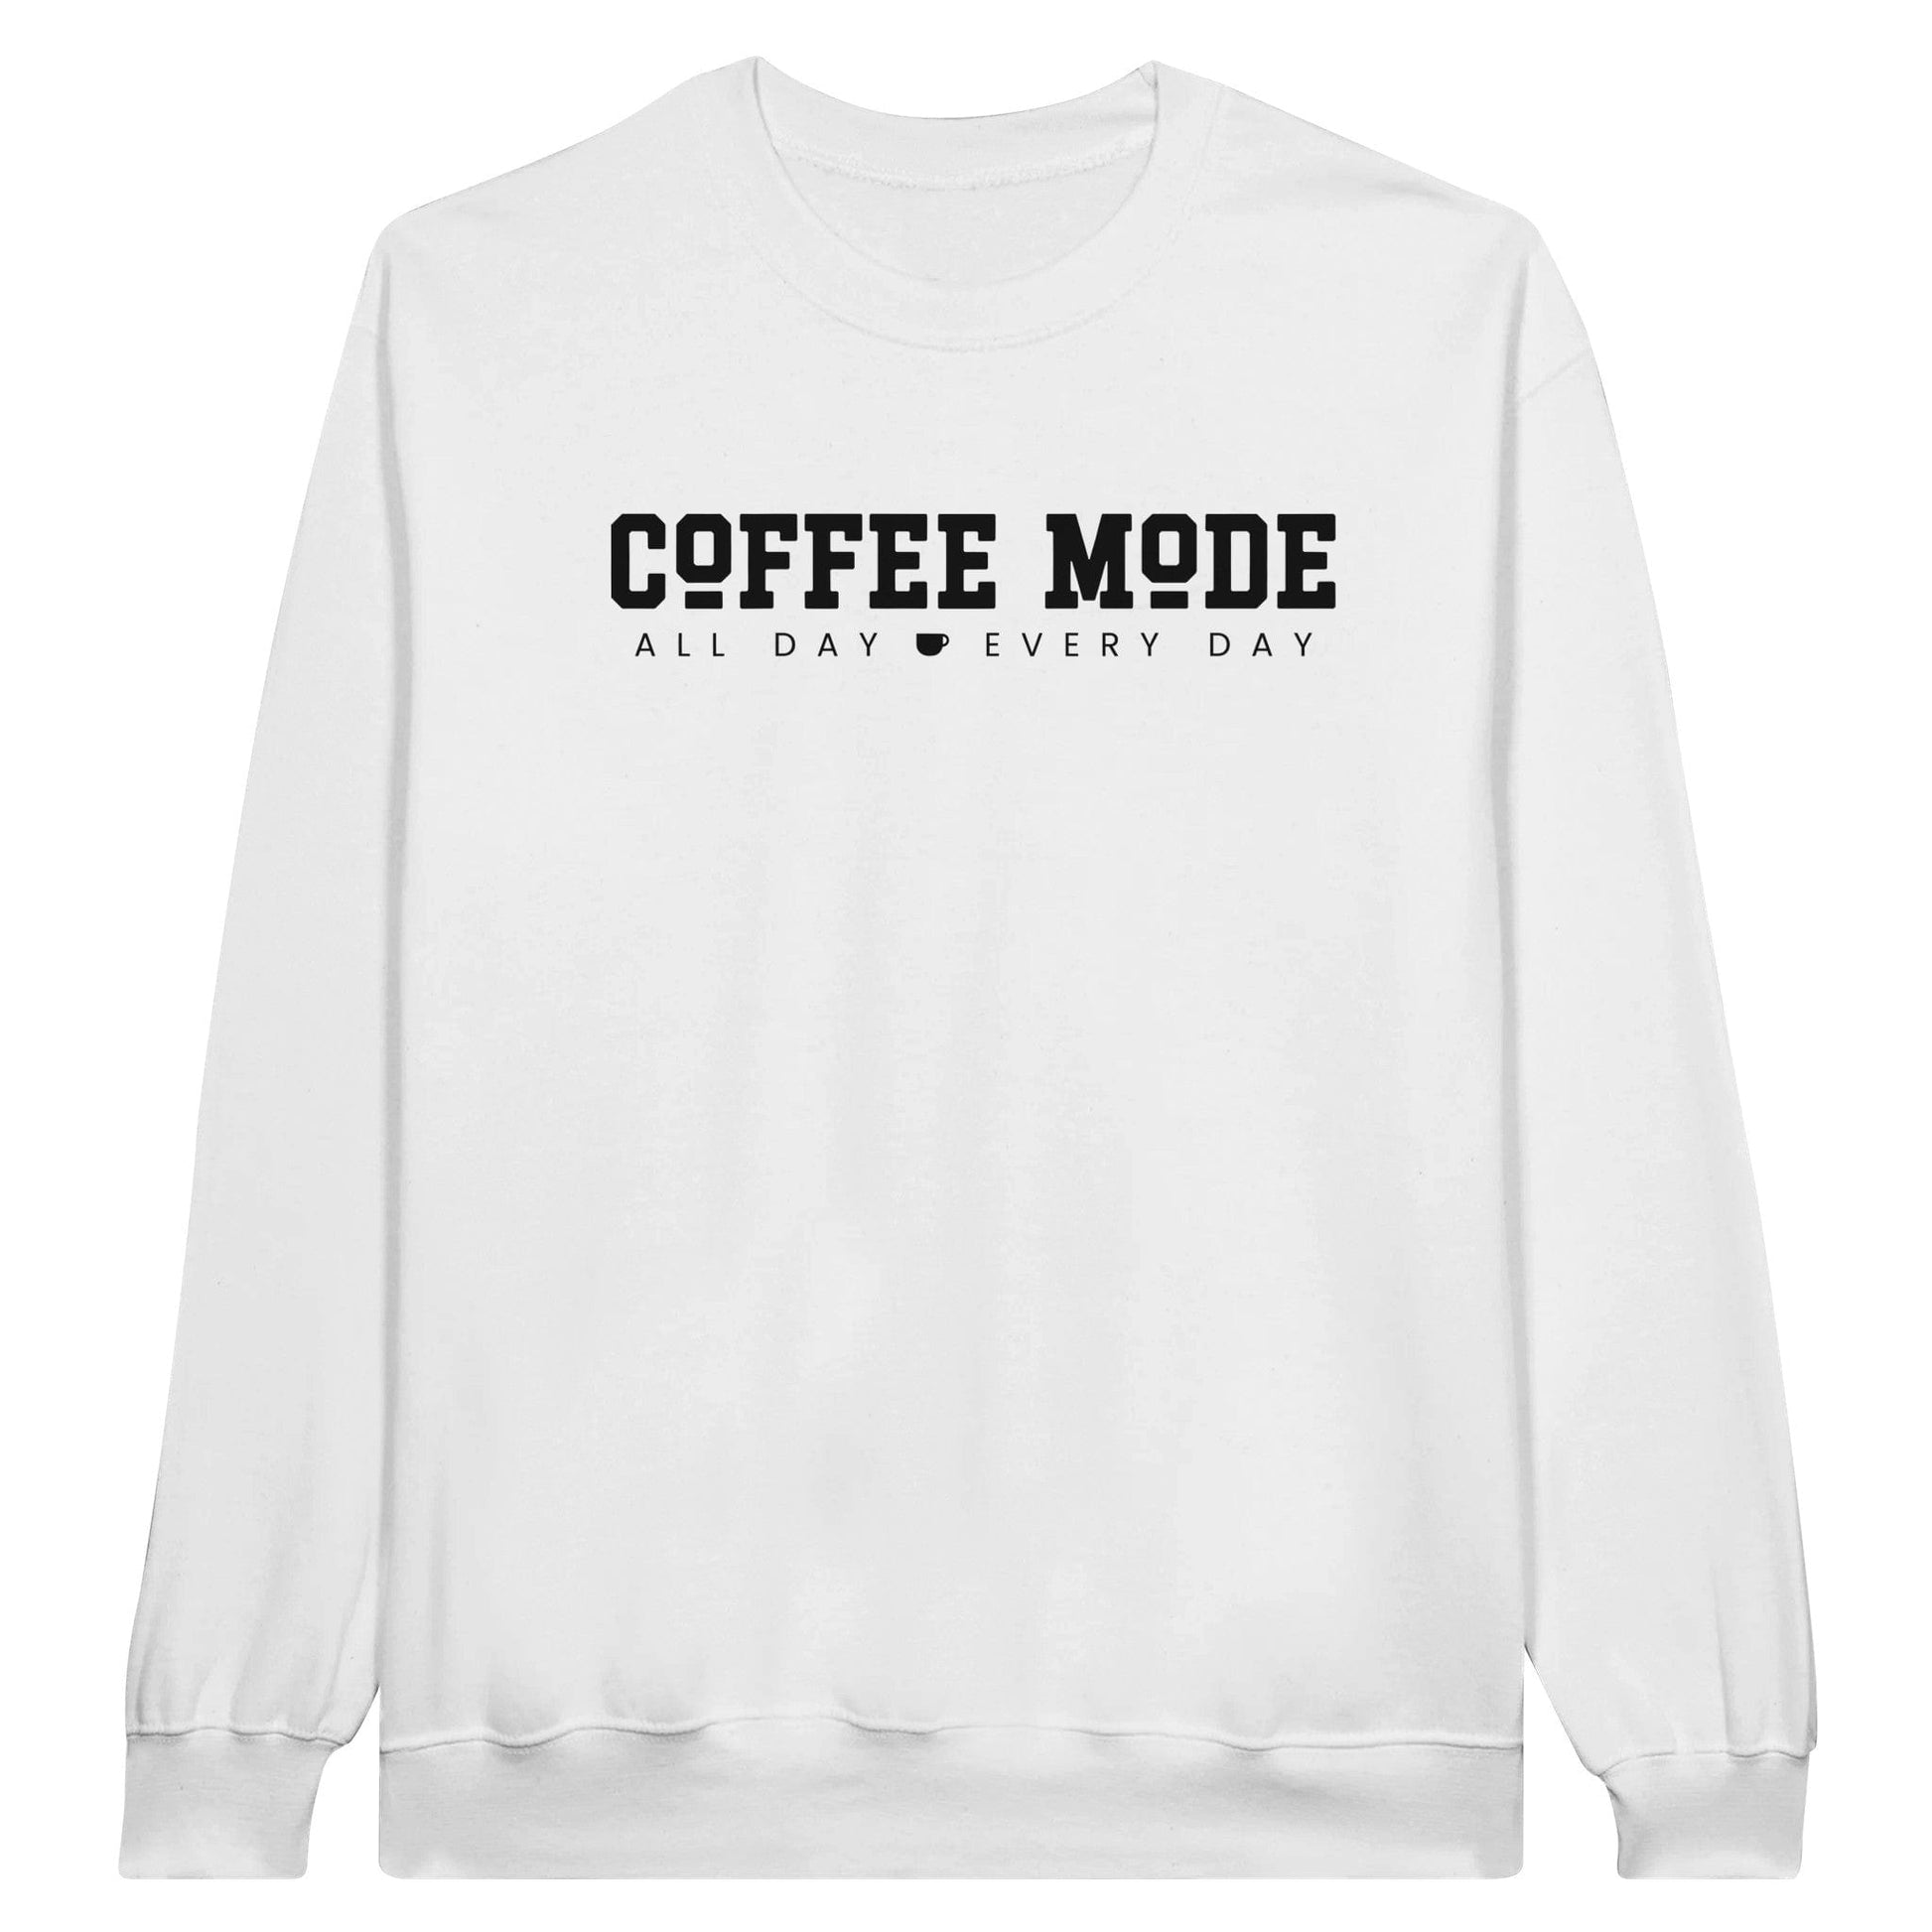 Good Bean Gifts "Coffee Mode" -Unisex Crewneck Sweatshirt White / M